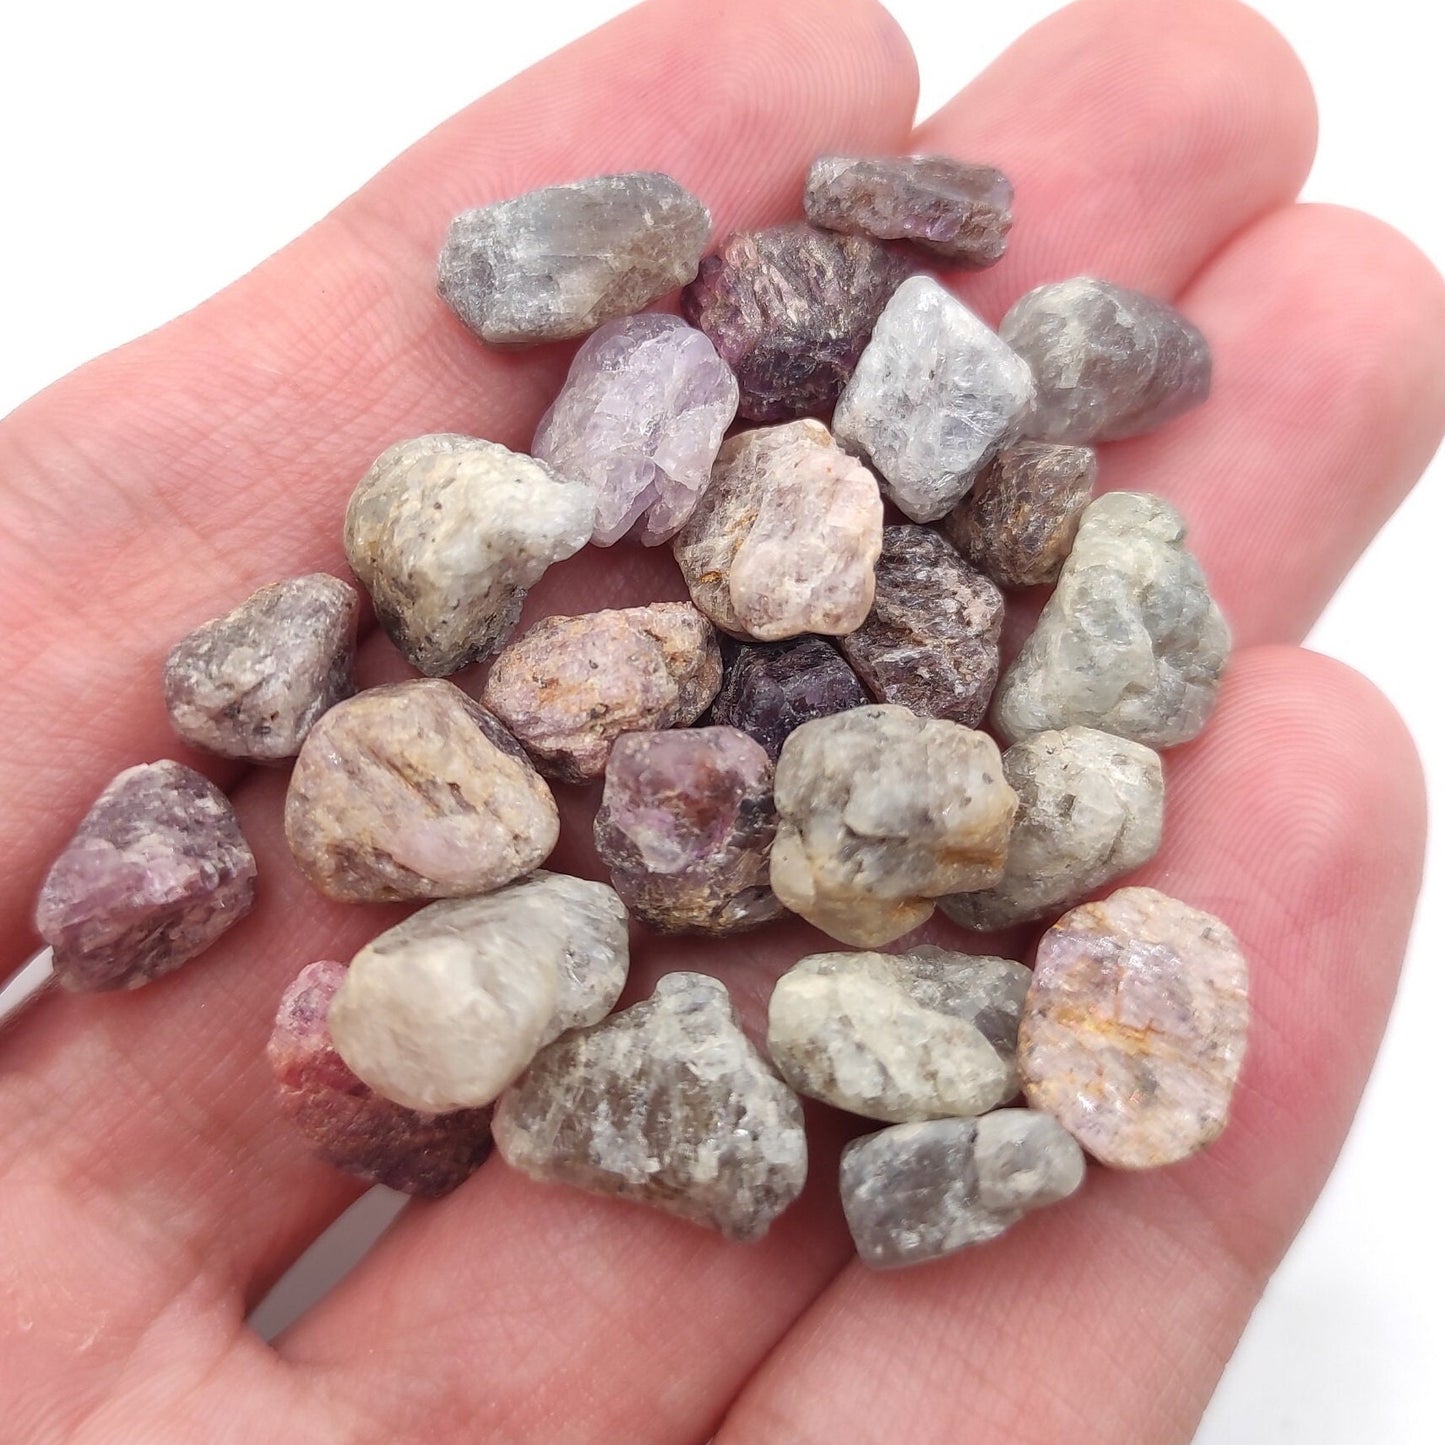 156ct Rough Sapphire Lot - Untreated & Unheated Sapphires - Rough Corundum Gems from Madagascar - Raw Sapphire Gemstones - Rough Gems